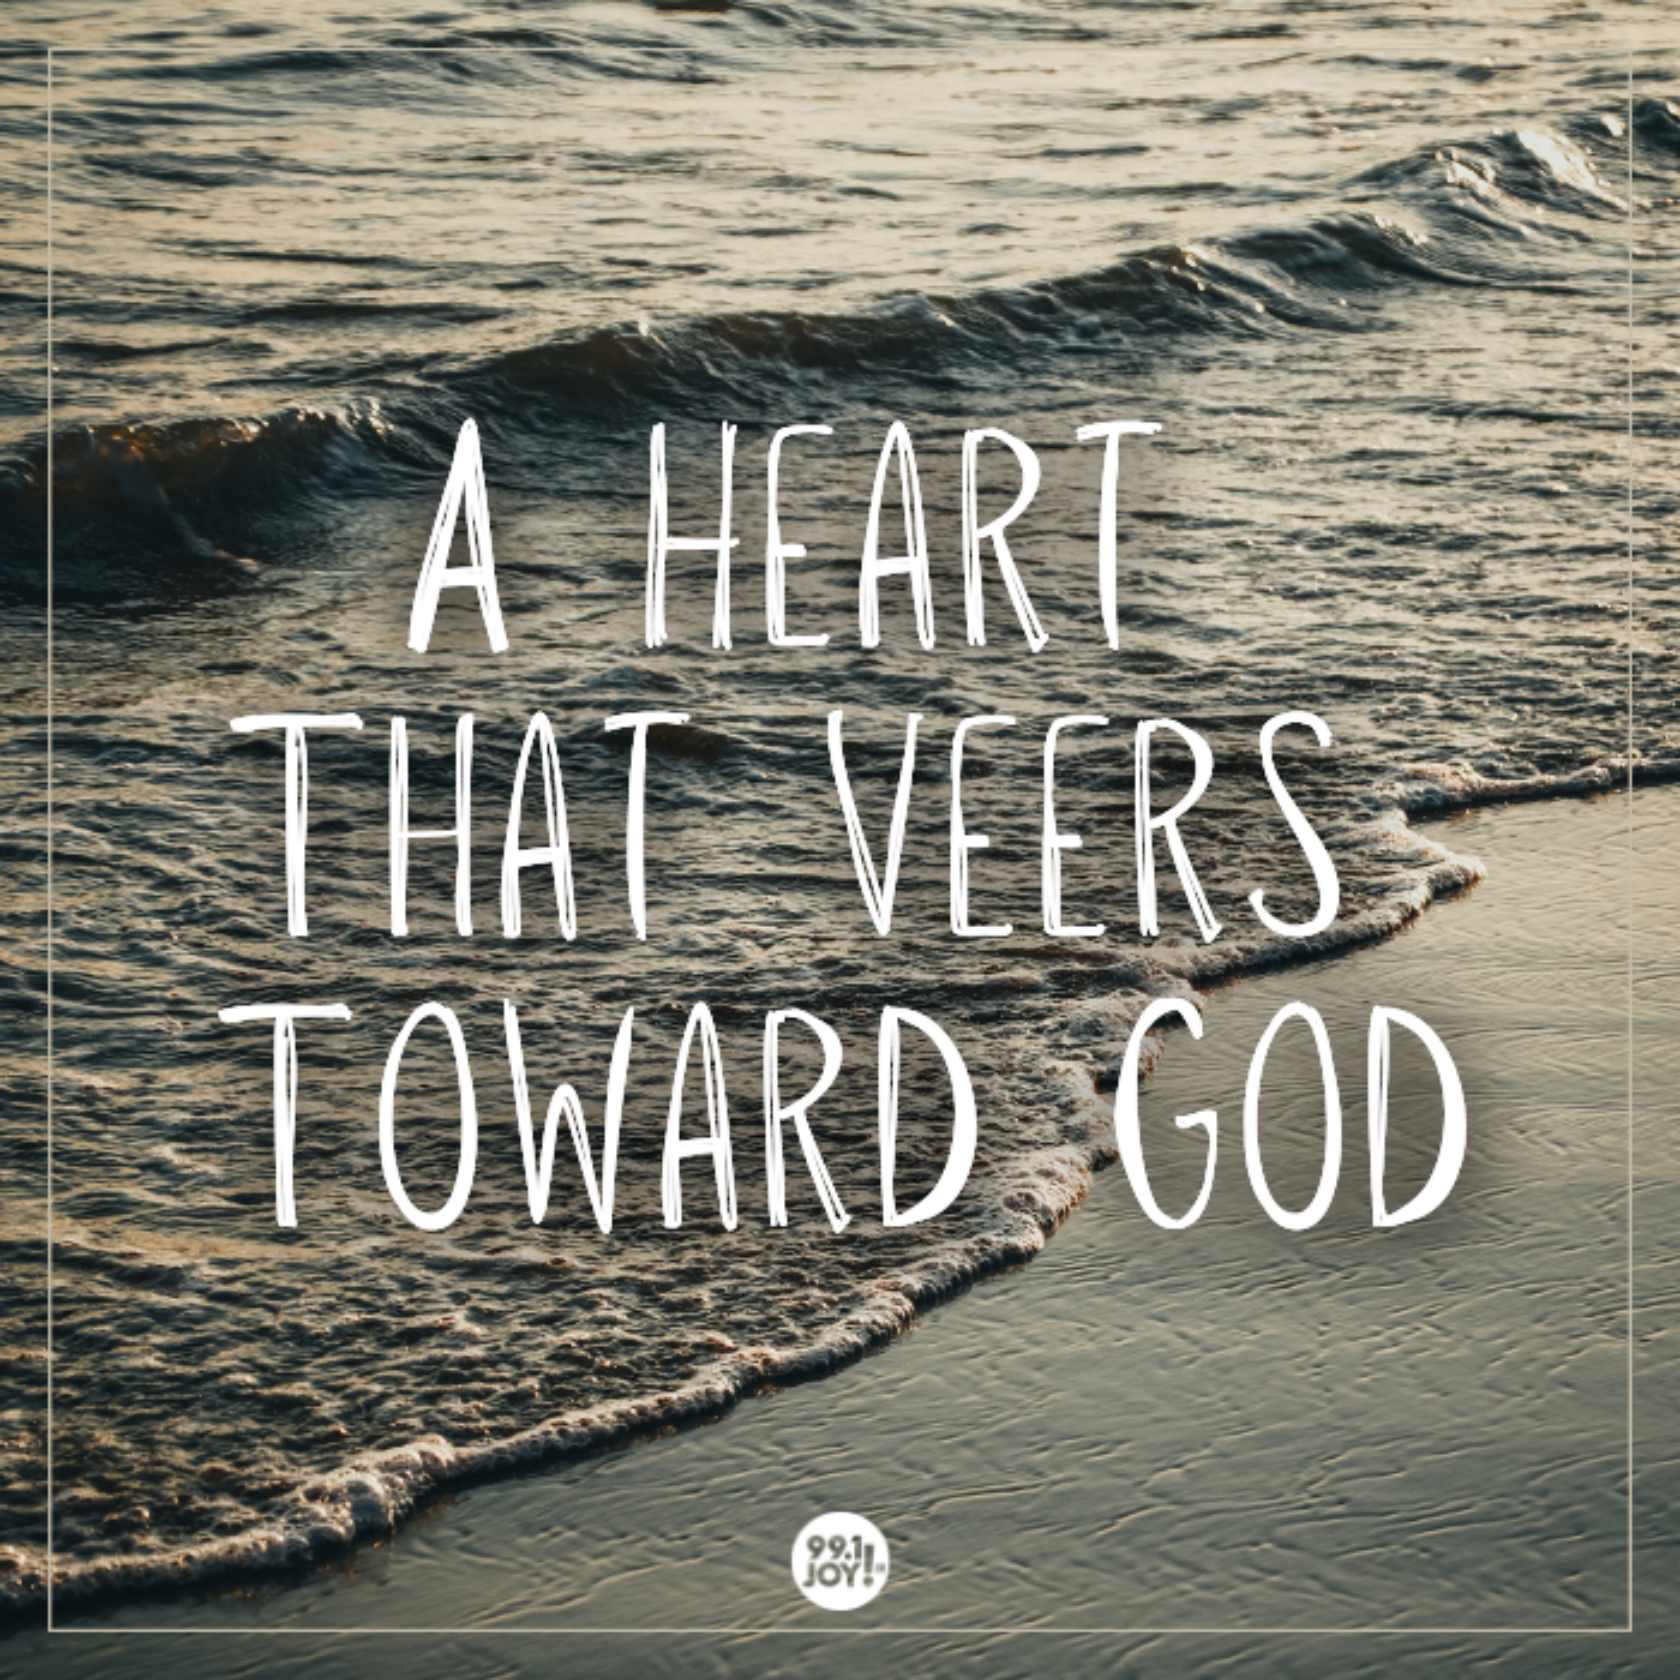 A Heart That Veers Toward God